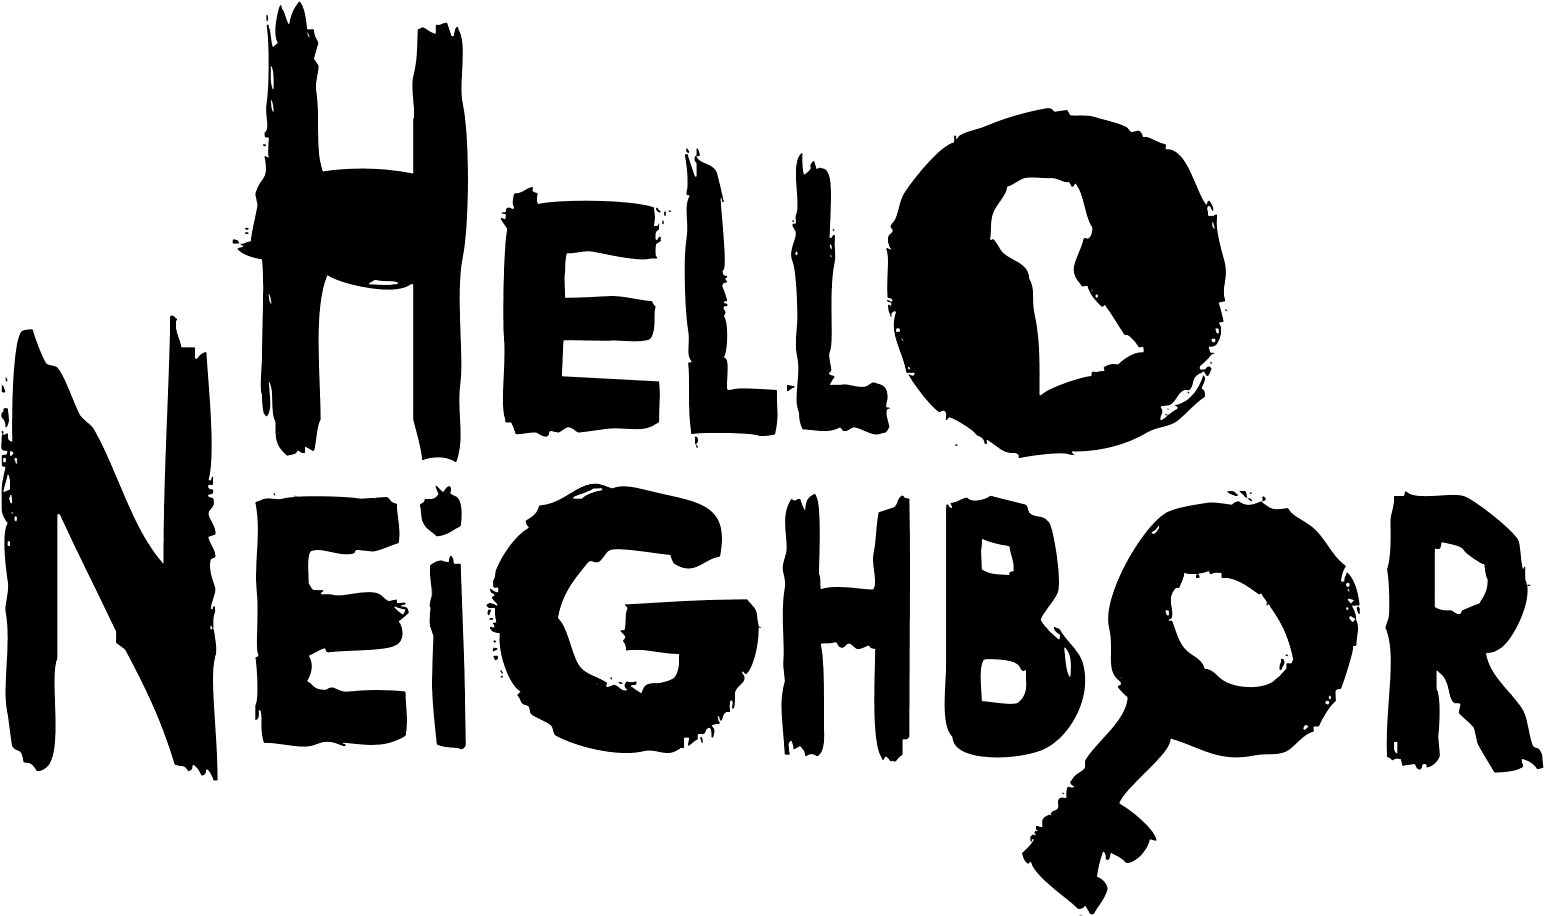 Хеллоу сик. Hello Neighbor 2 лого. Привет сосед значок. Привет сосед надпись. Привет сосед без фона.